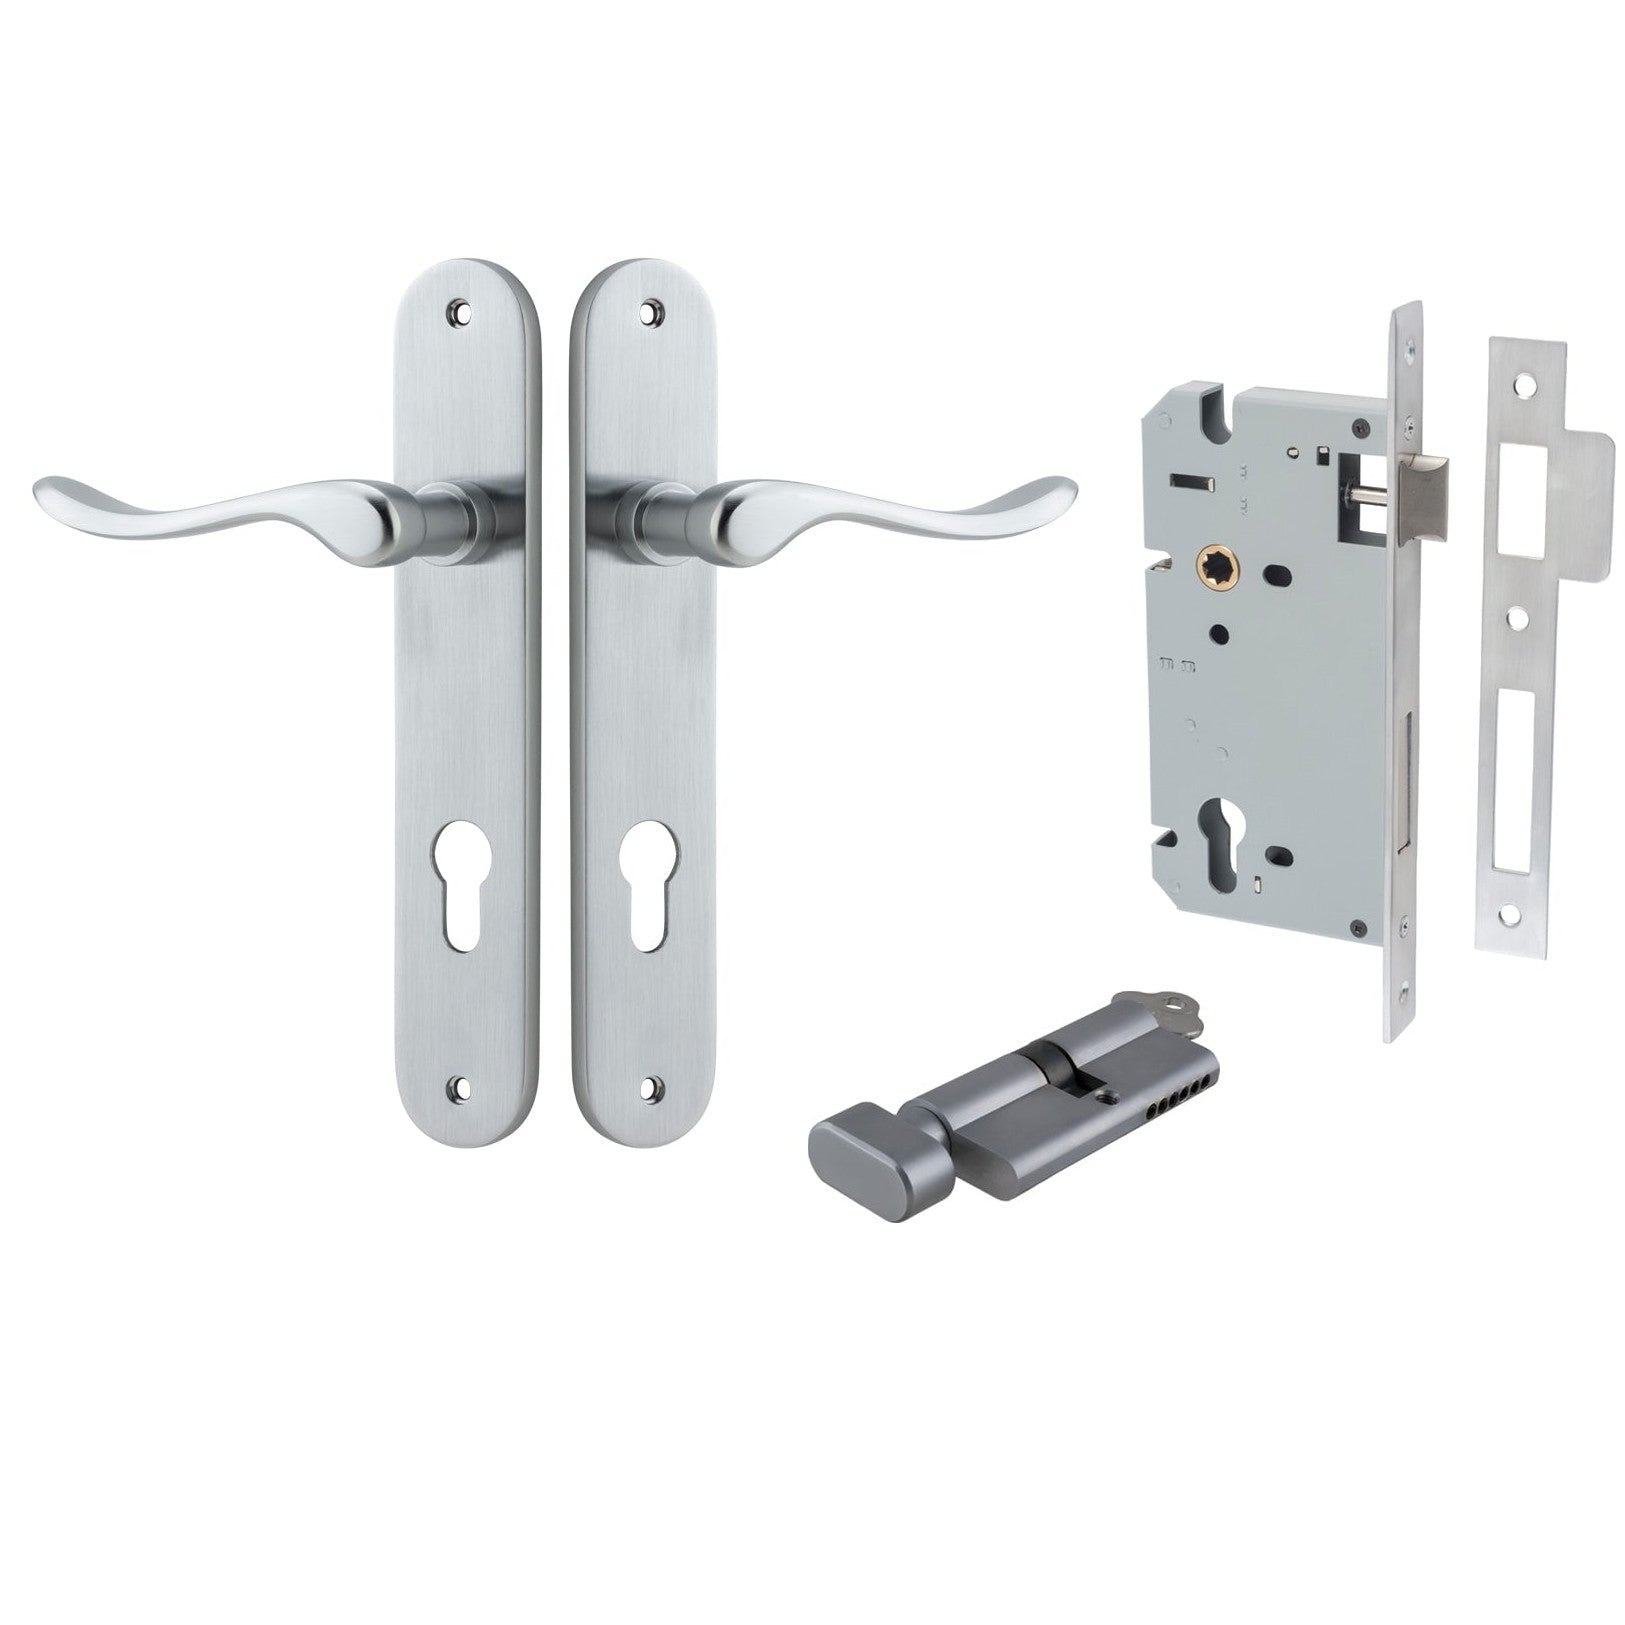 Iver Door Handle Stirling Oval Euro Pair Key/Thumb Brushed Chrome Entrance Kit